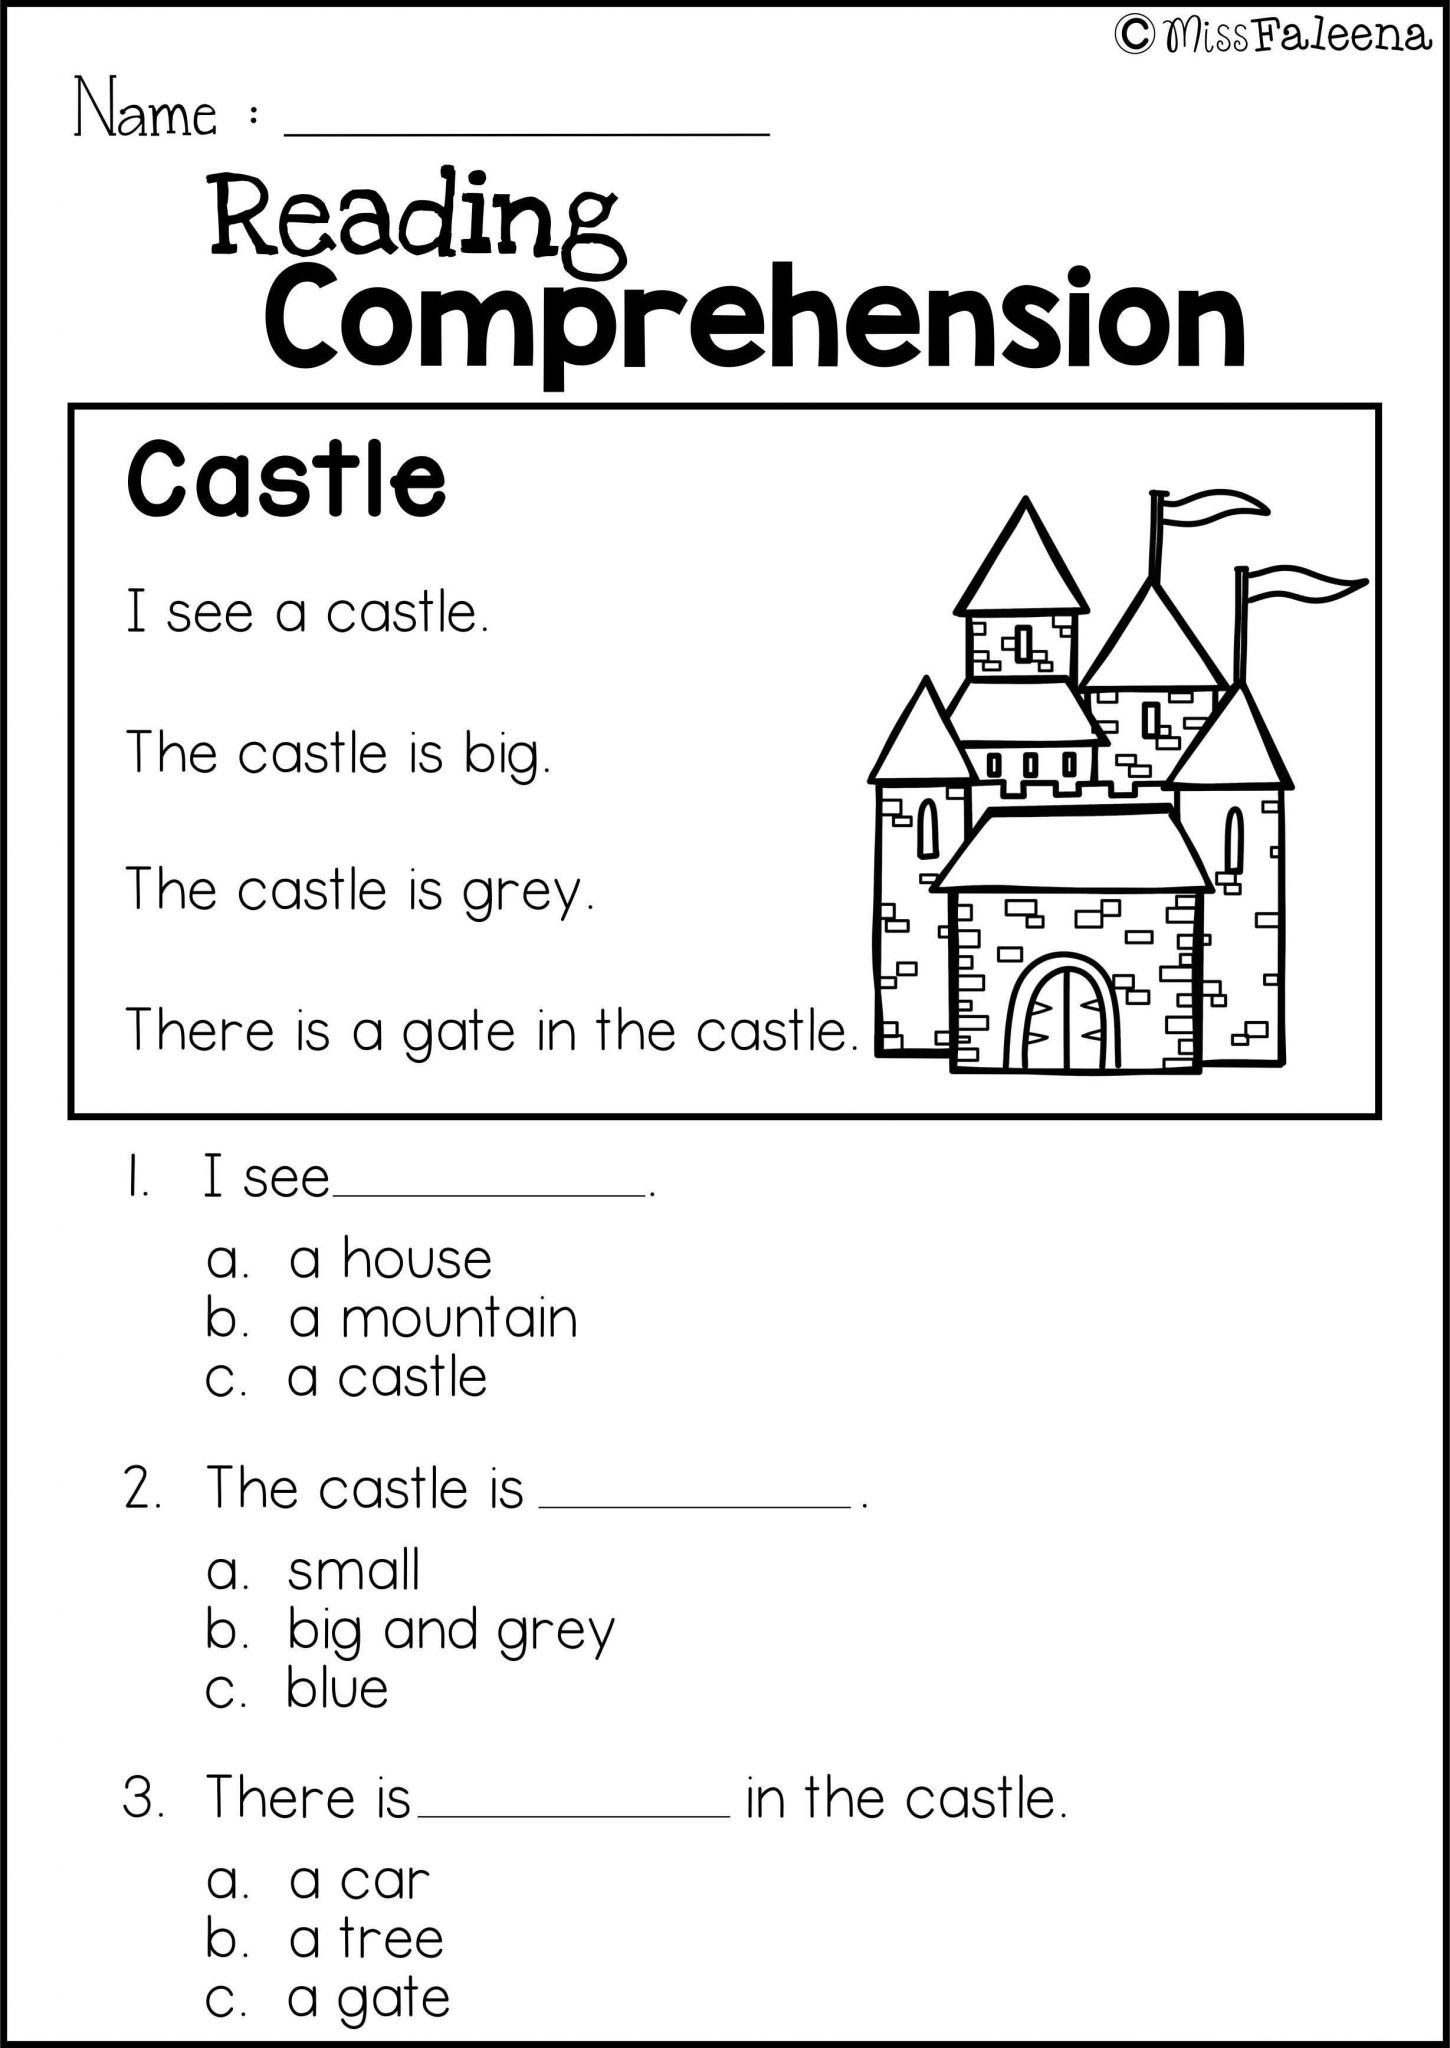 Comprehension Worksheets for Grade 2 Also Free Worksheets Library Download and Print Worksheets